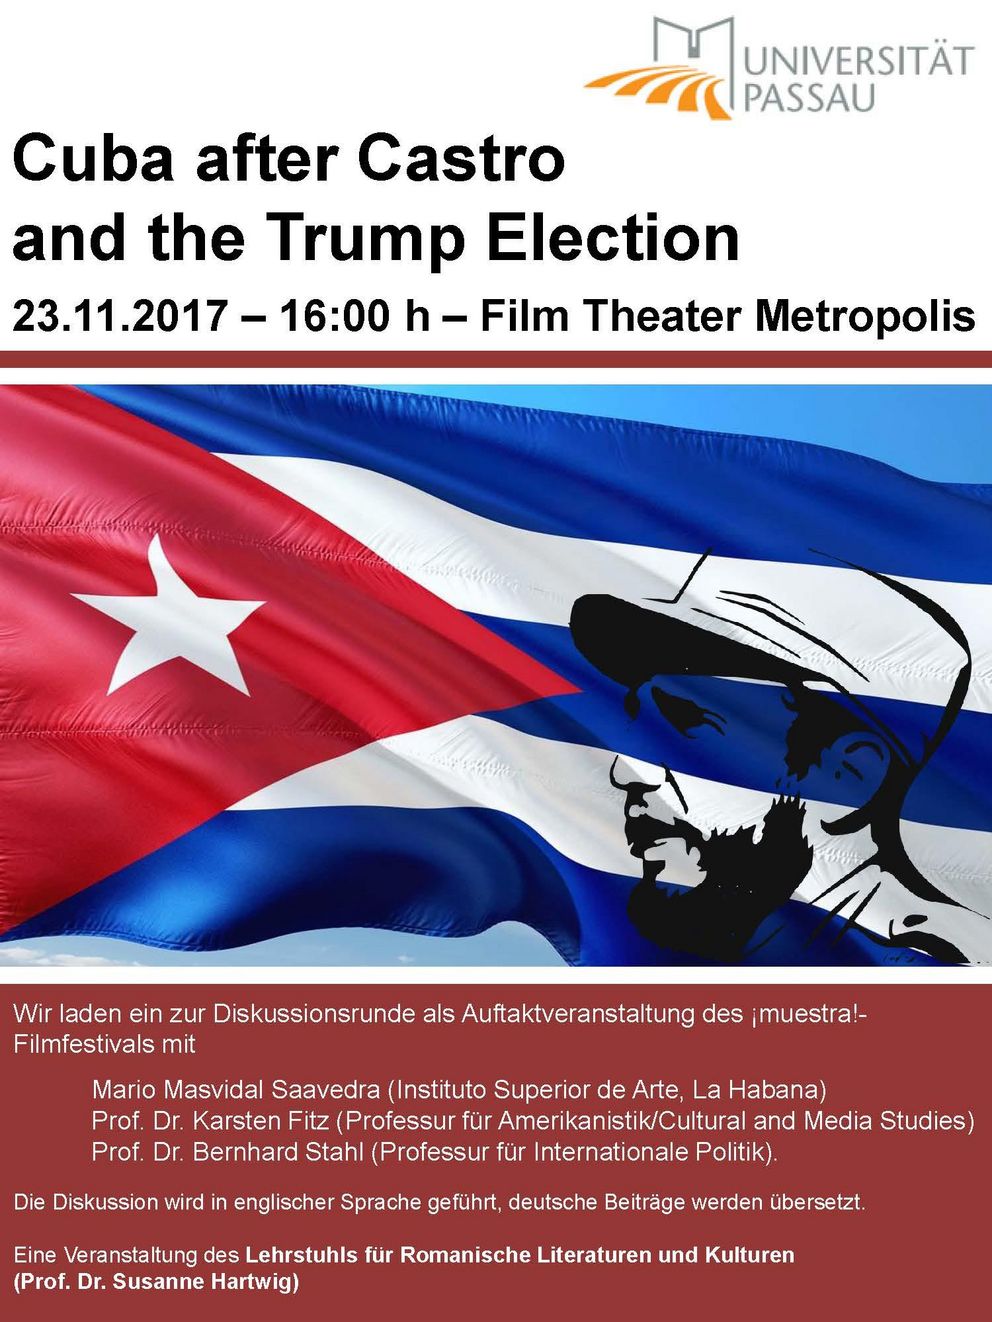 Plakat zur Podiumsdiskussion "Cuba after Castro"